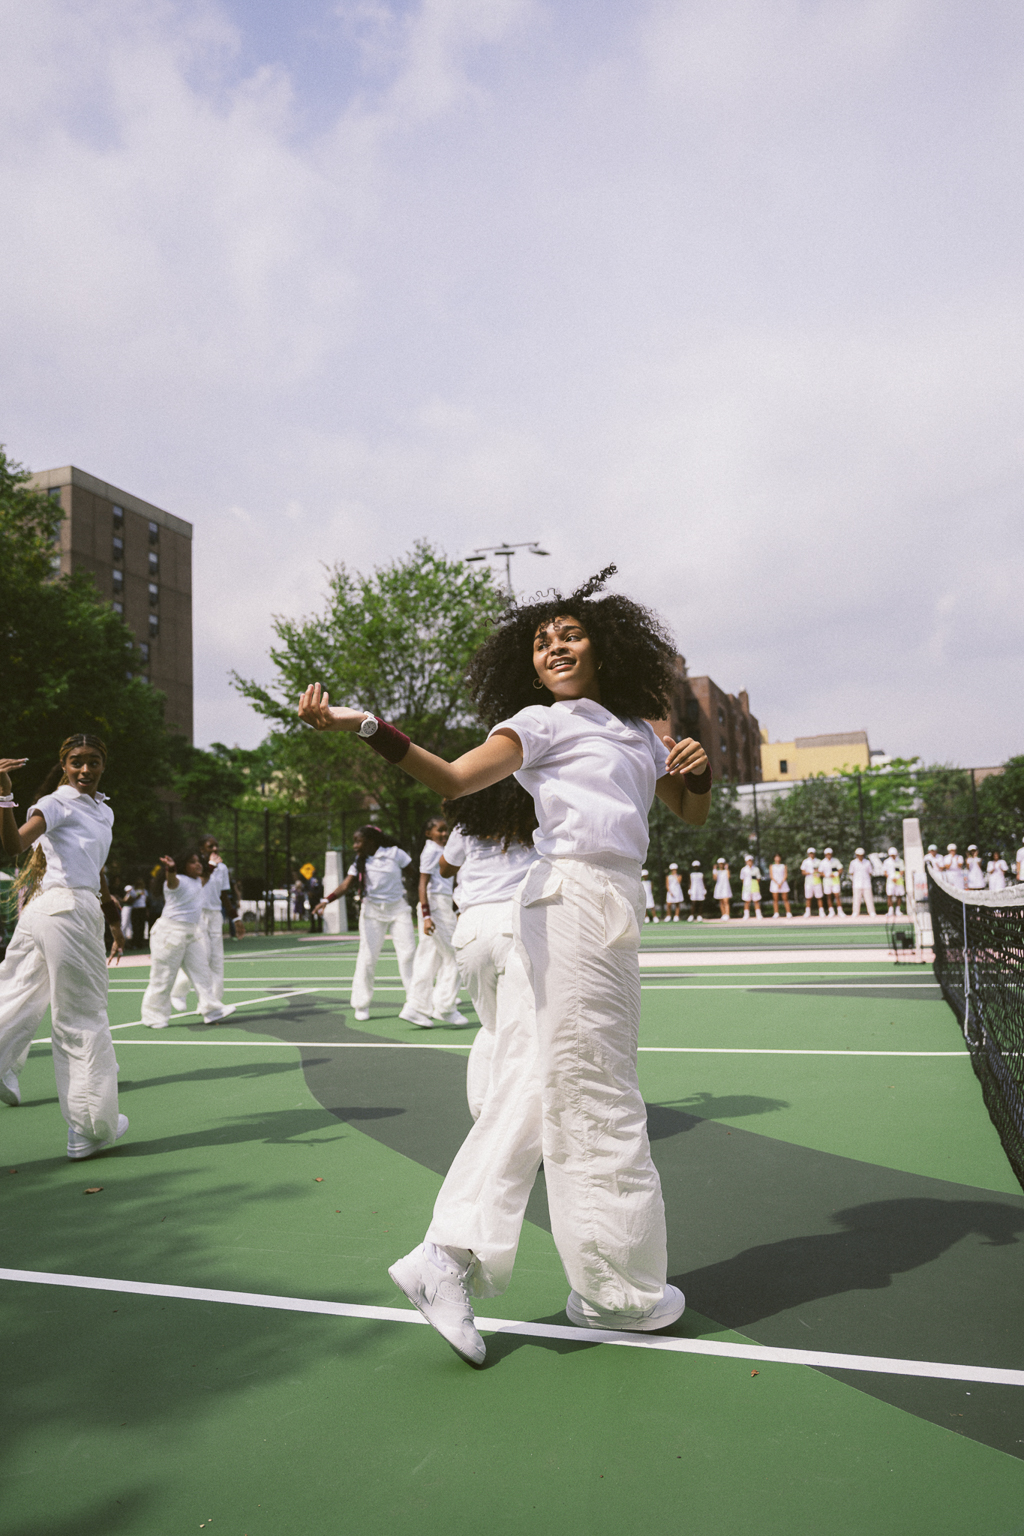 terrain de tennis Lacoste New York City bronx venus williams danseuse